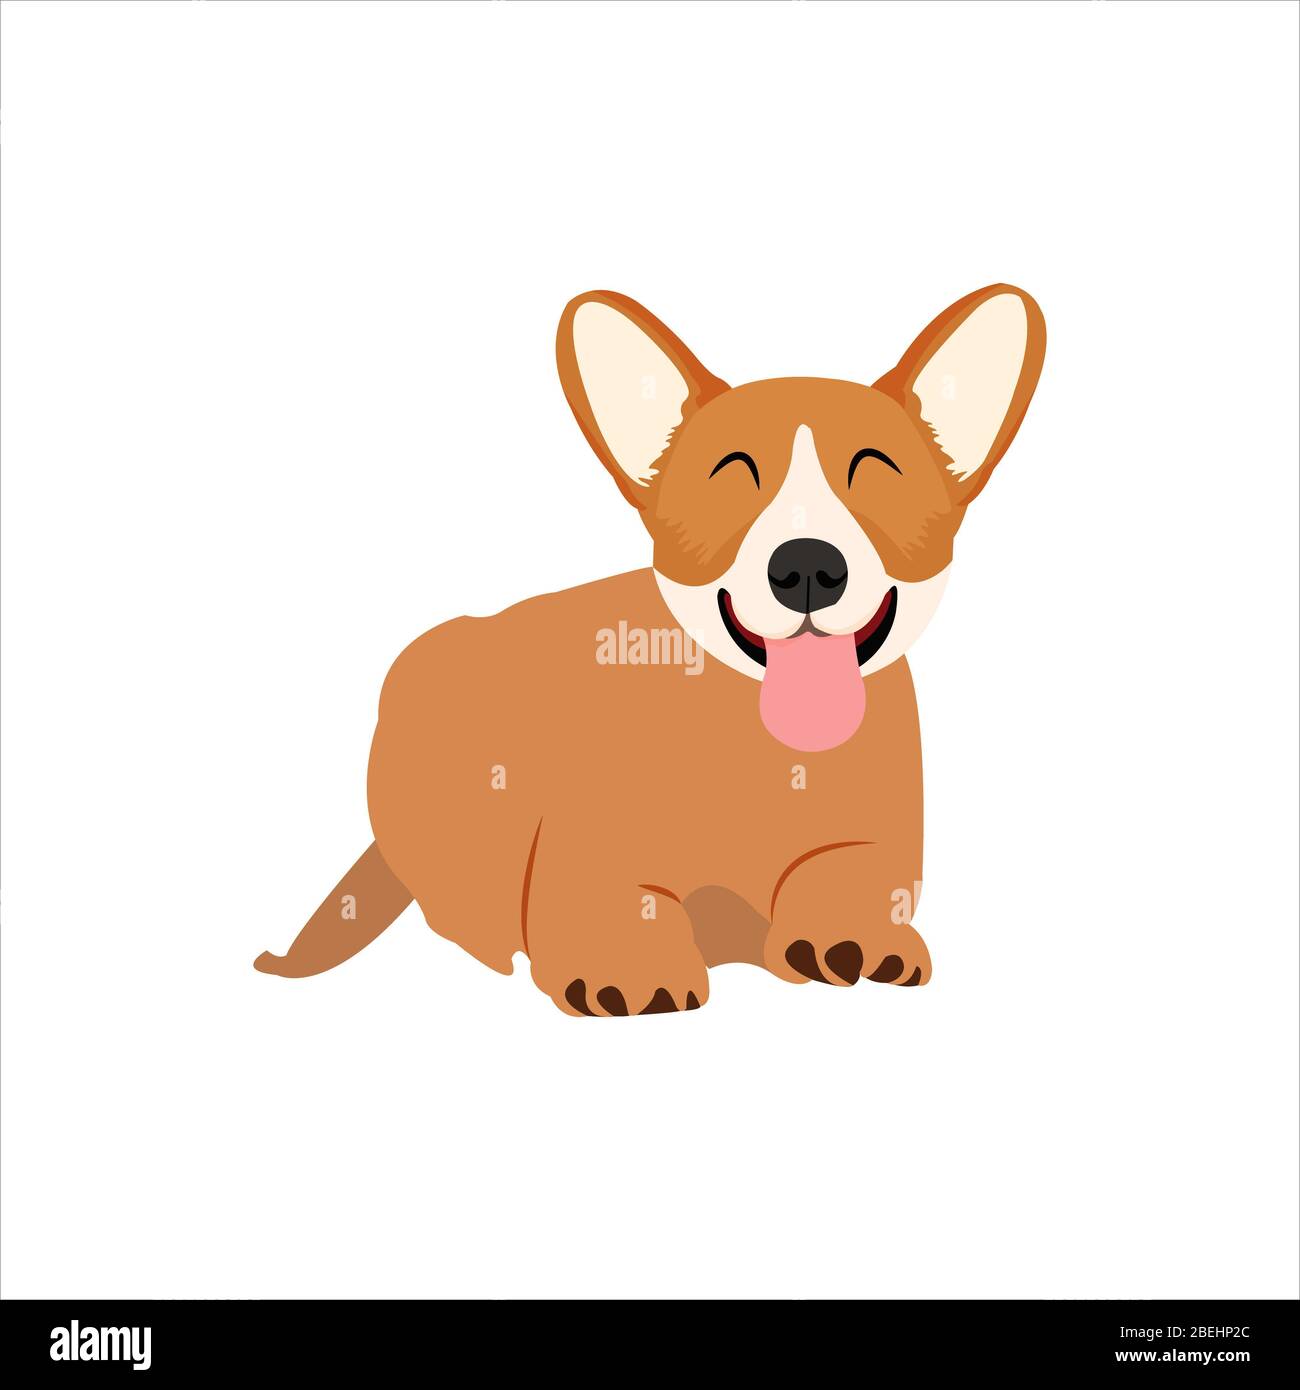 Lustige Hund Clip Art Illustration Cartoon-Stil Stockfotografie - Alamy